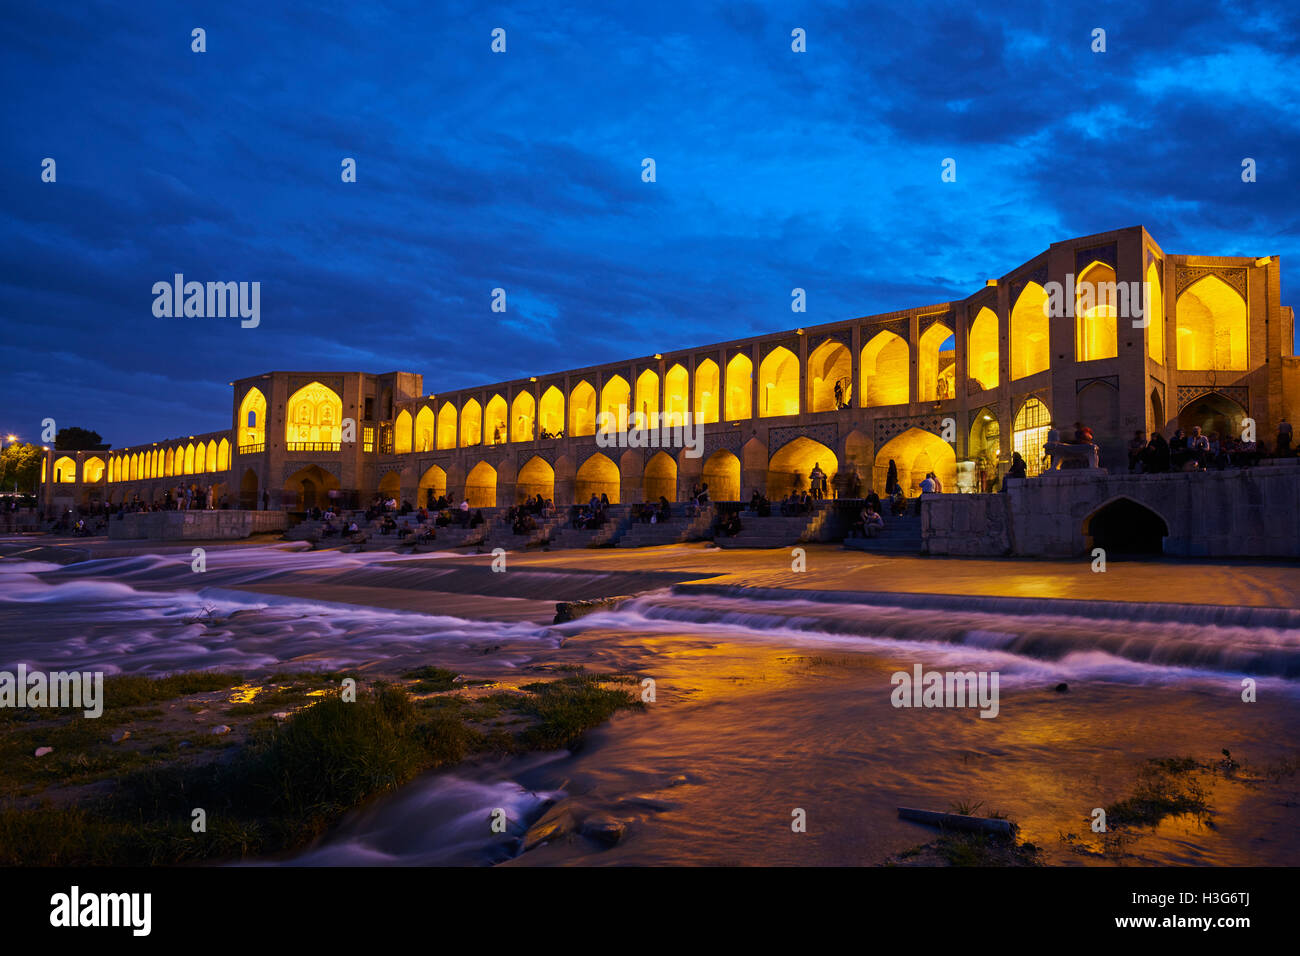 Iran, Isfahan, Khaju ponte sul fiume Zayandeh Foto Stock